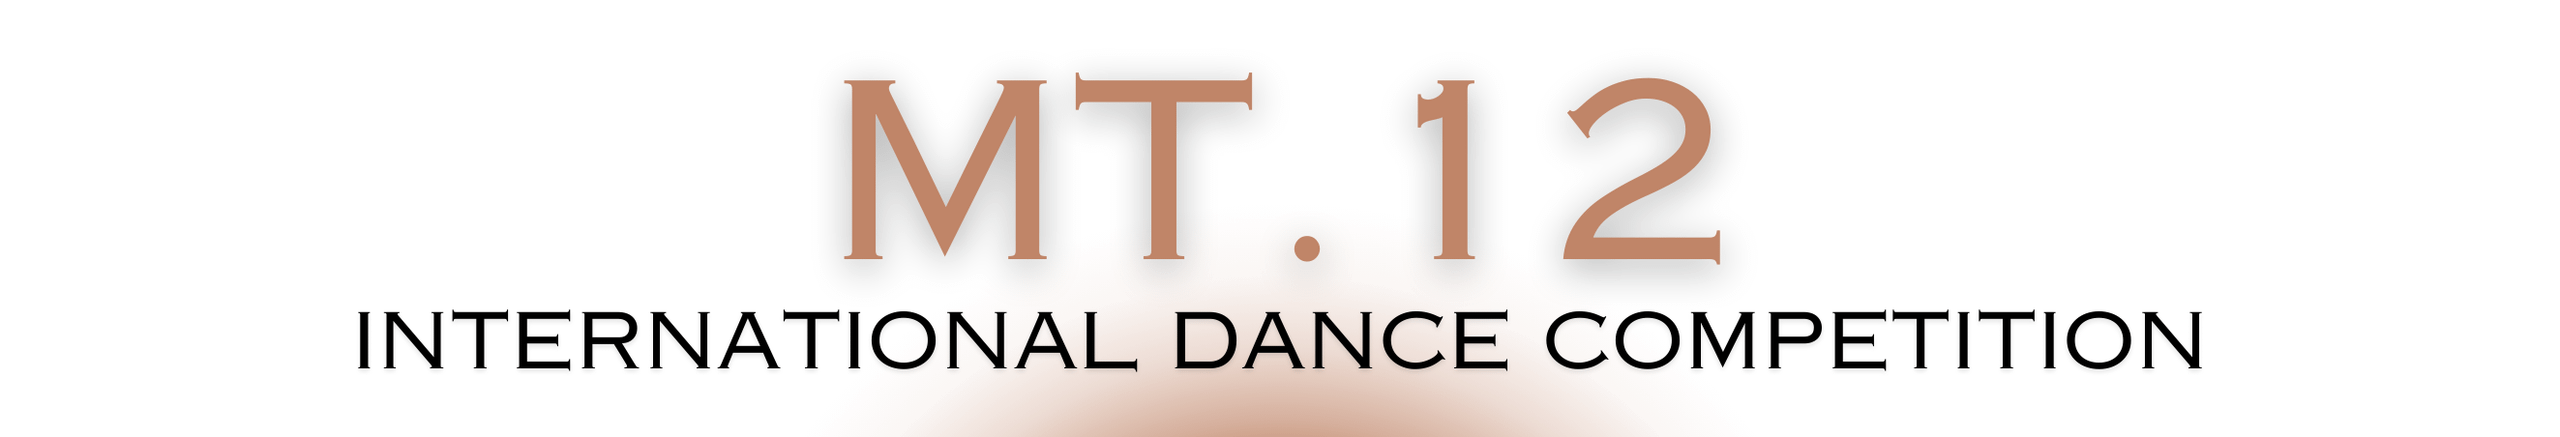 INTERNATIONAL DANCE COMPETITION MT.12